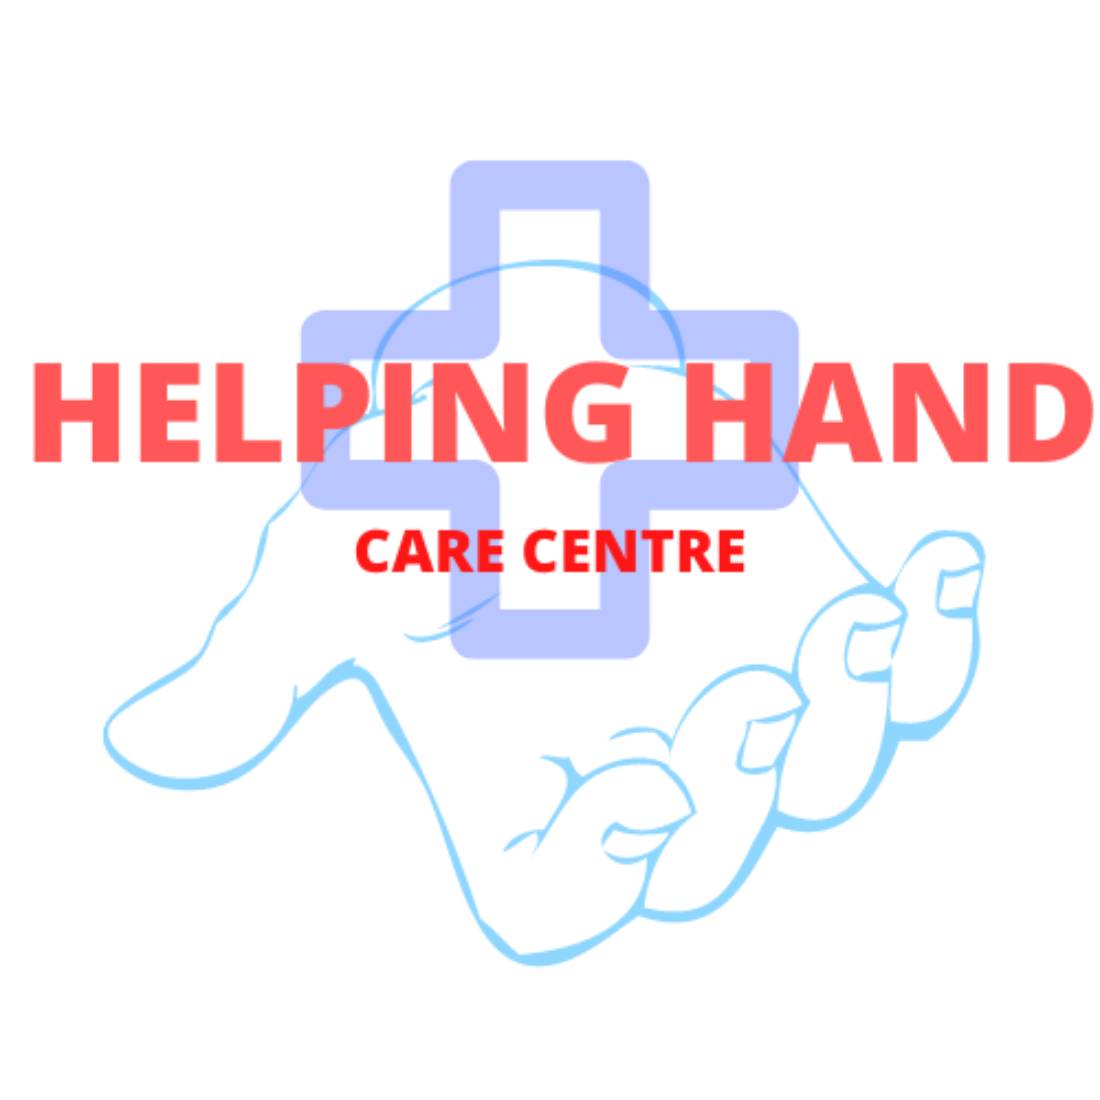 Helping Hand Care Centre Logo Design cover image.